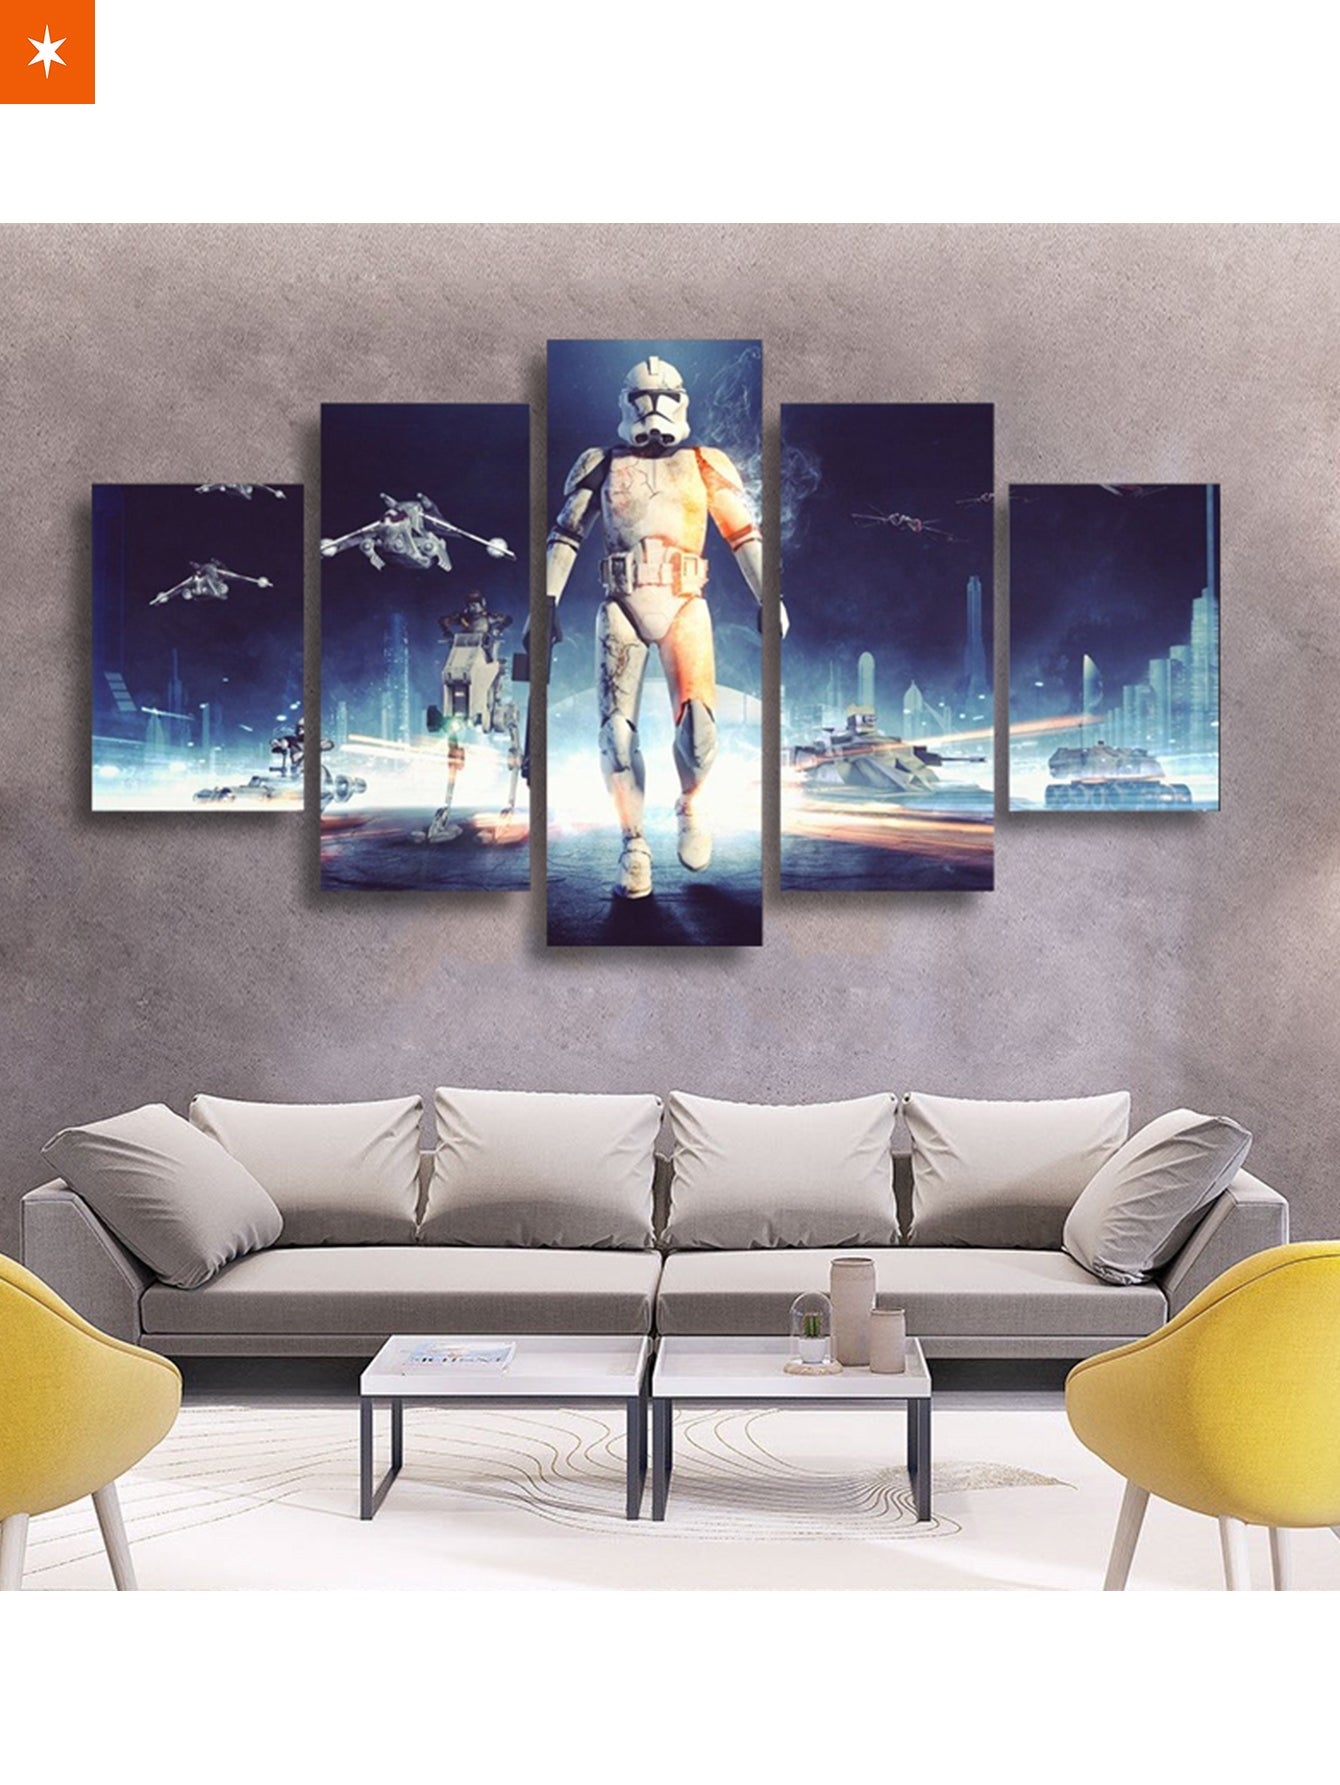 Fandomaniax - The Stormtrooper 5 Piece Canvas